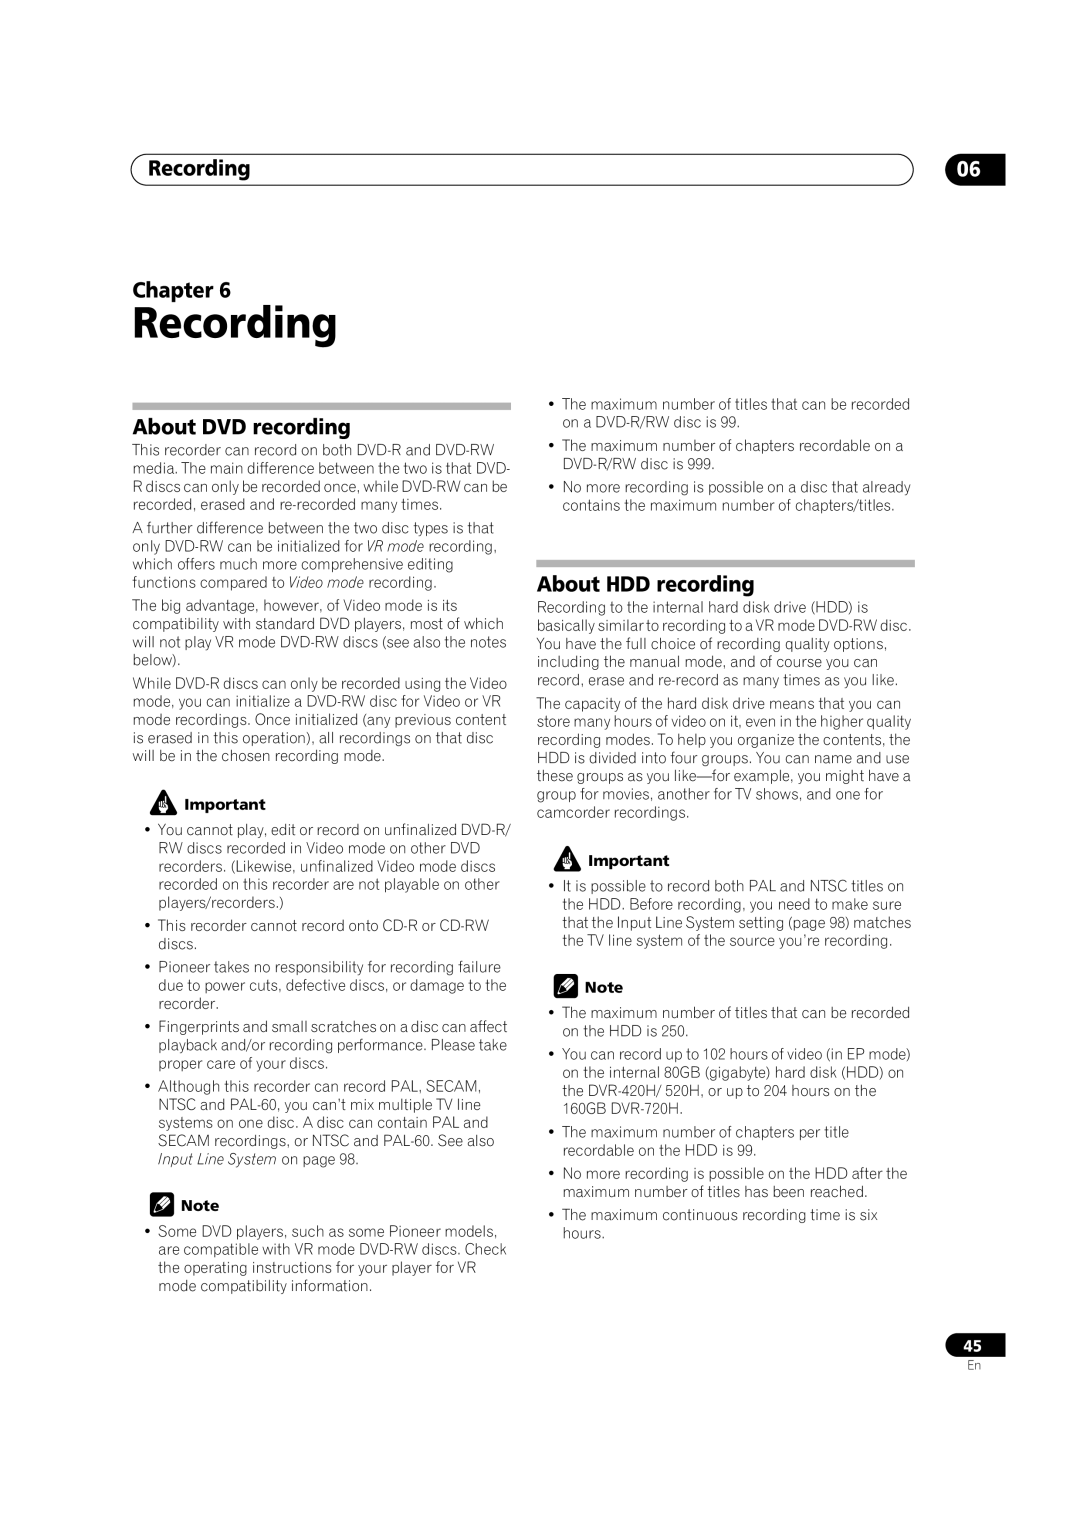 Pioneer DVR-520H, DVR-720H manual Recording Chapter, About DVD recording, About HDD recording 